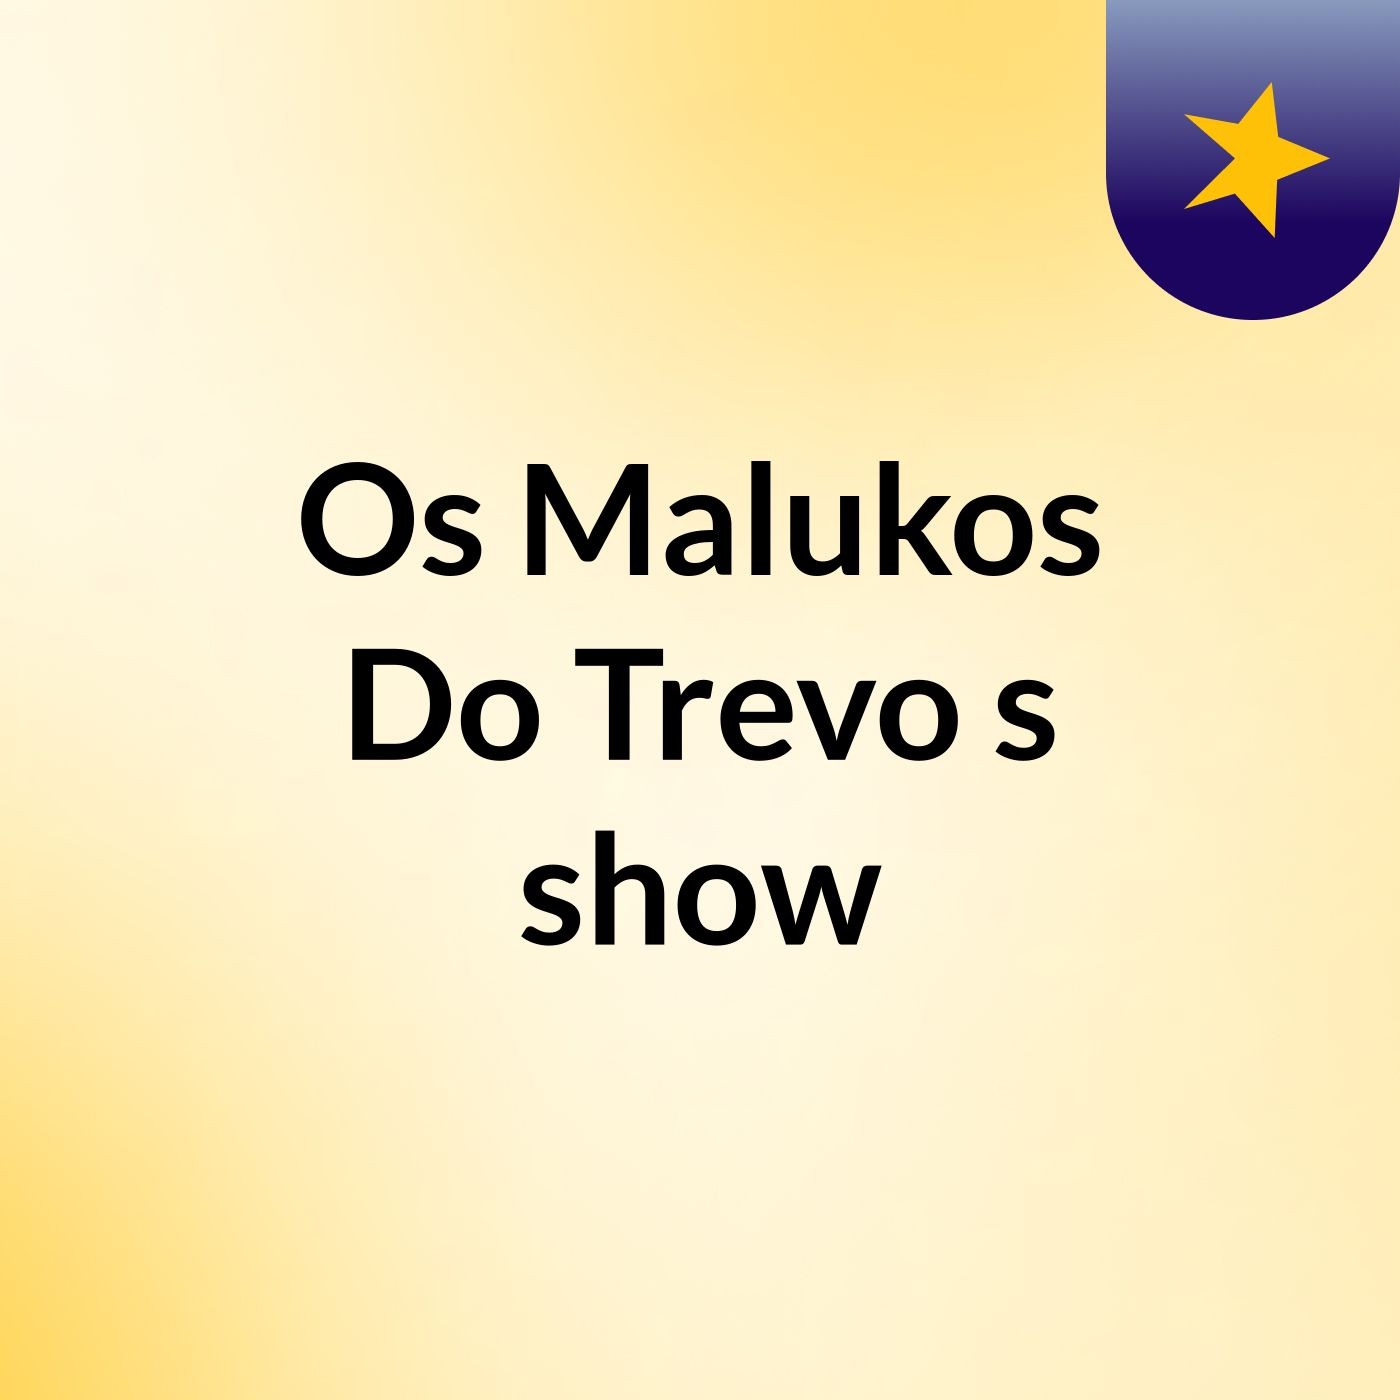 Os Malukos Do Trevo's show